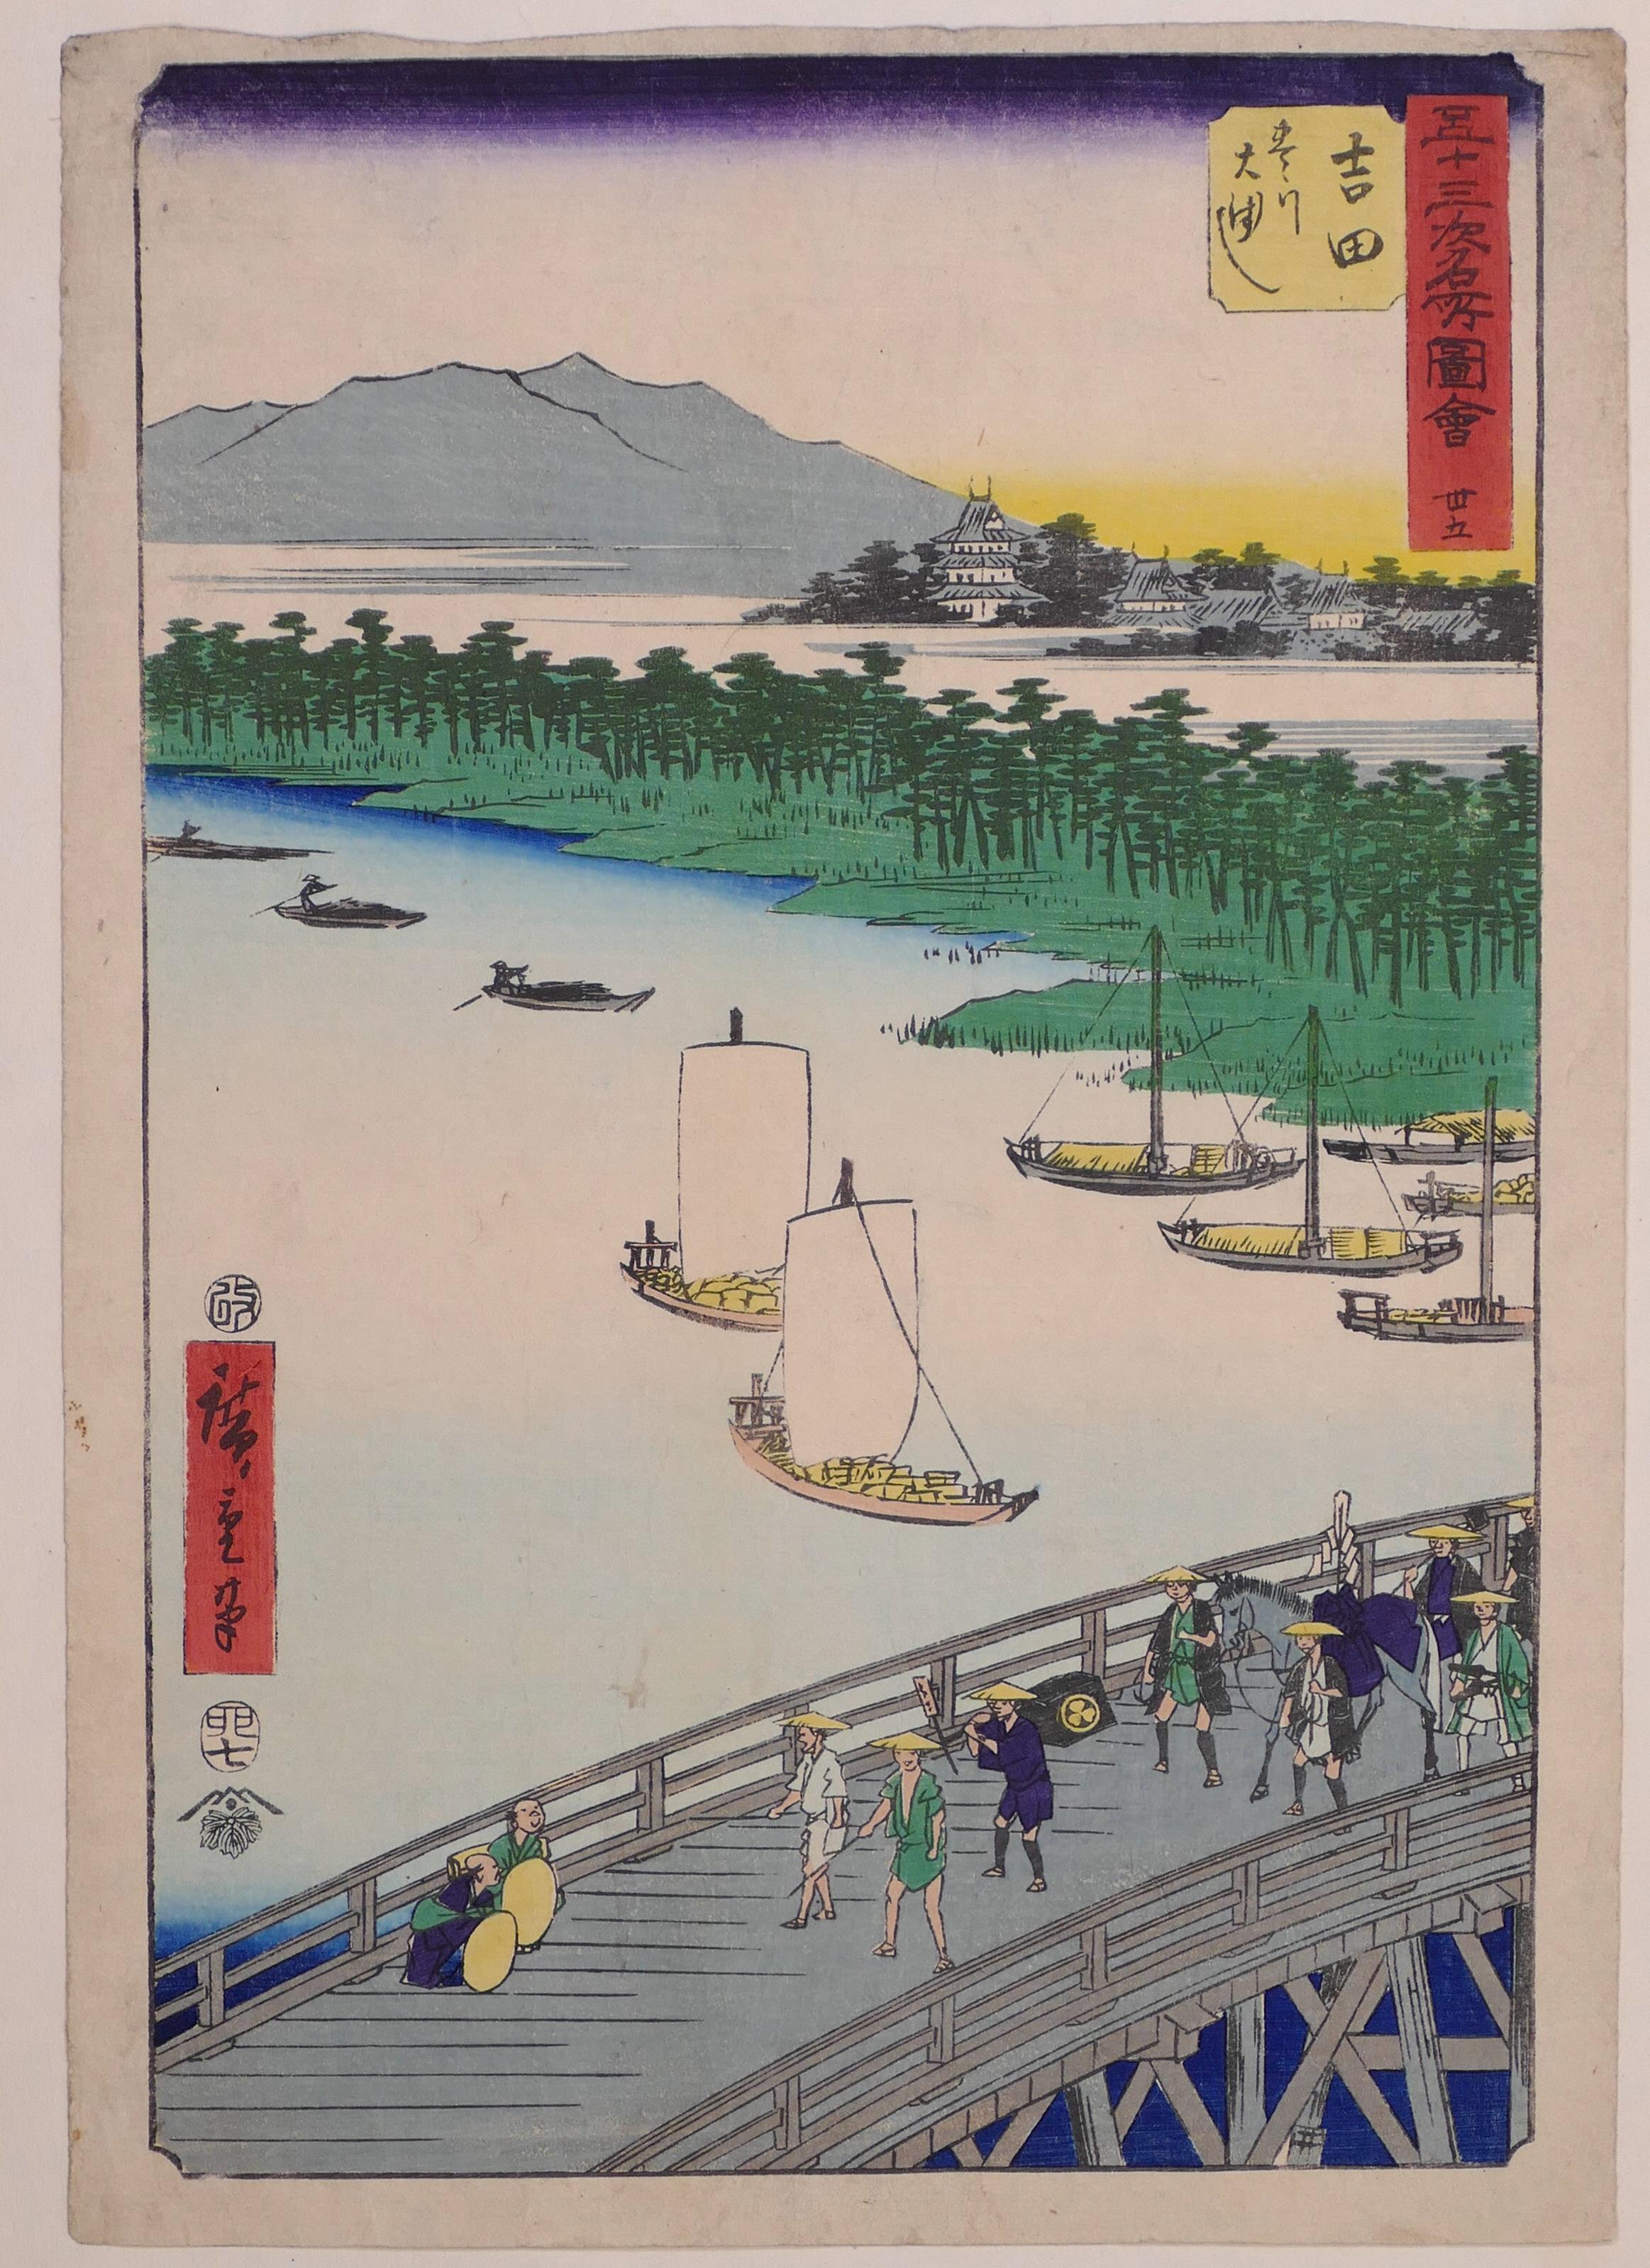 Utagawa Hiroshige (Ando Hiroshige) Figurative Print - The Great Bridge over the Toyo River - by Hiroshige Utagawa - 1855